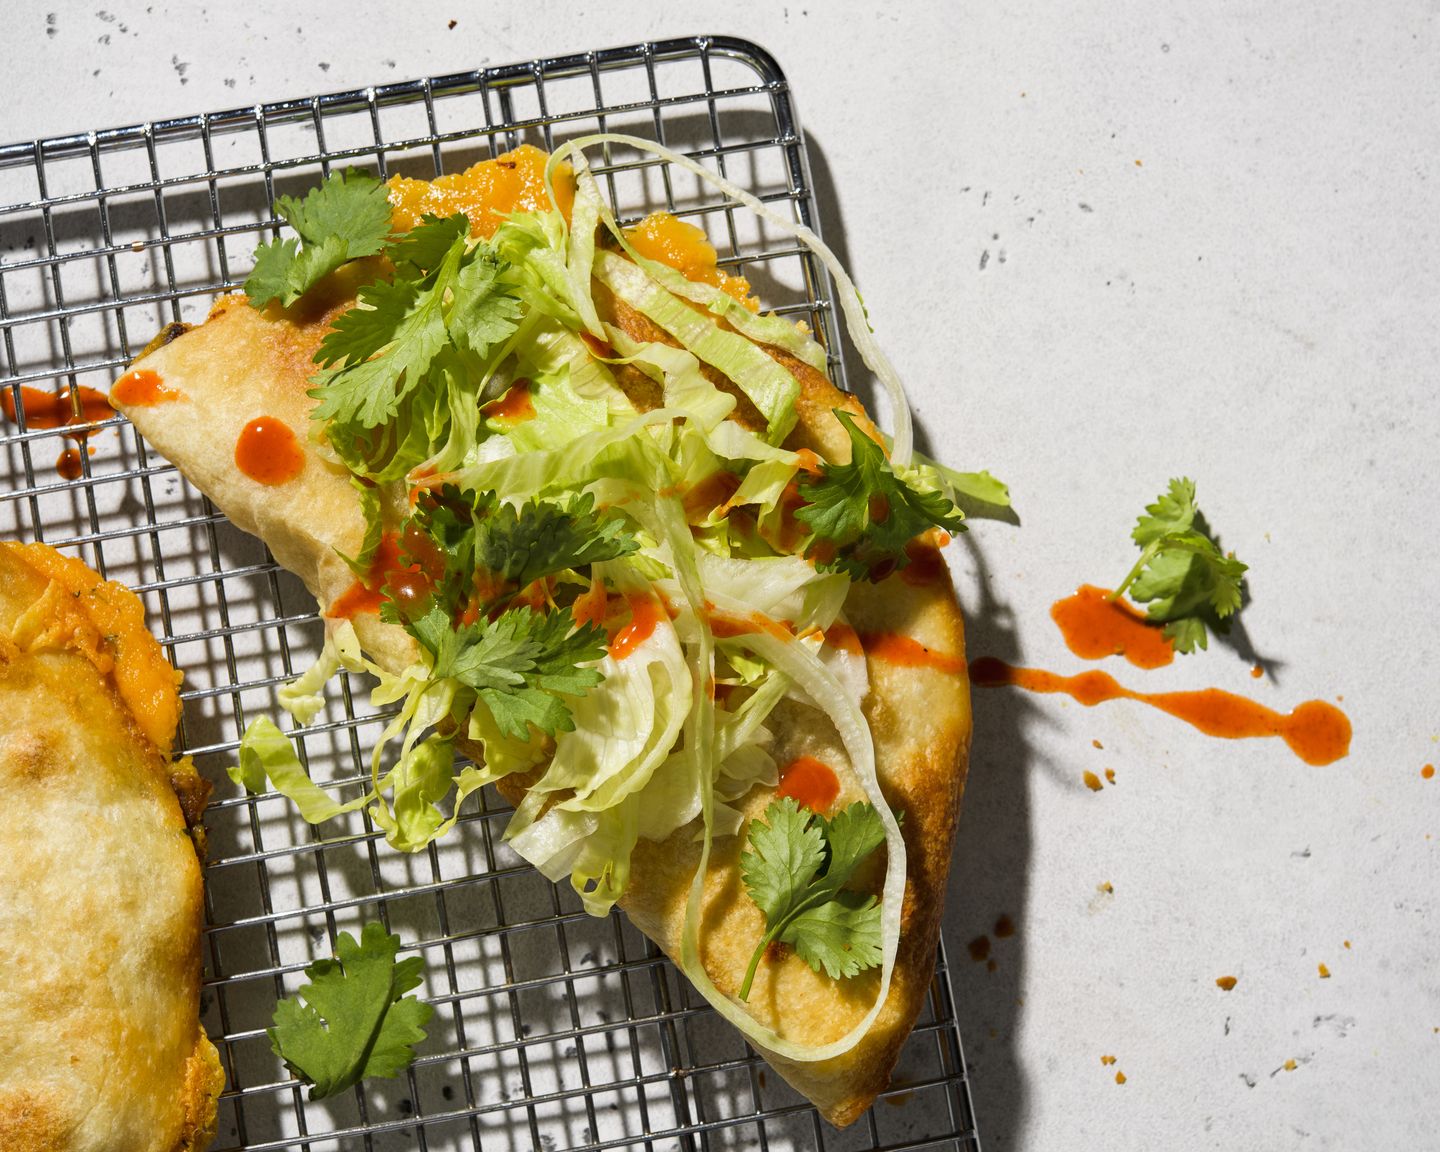 Oven-fried potato and cheese Tacos Dorados evoke Los Angeles' innovative tortilla scene